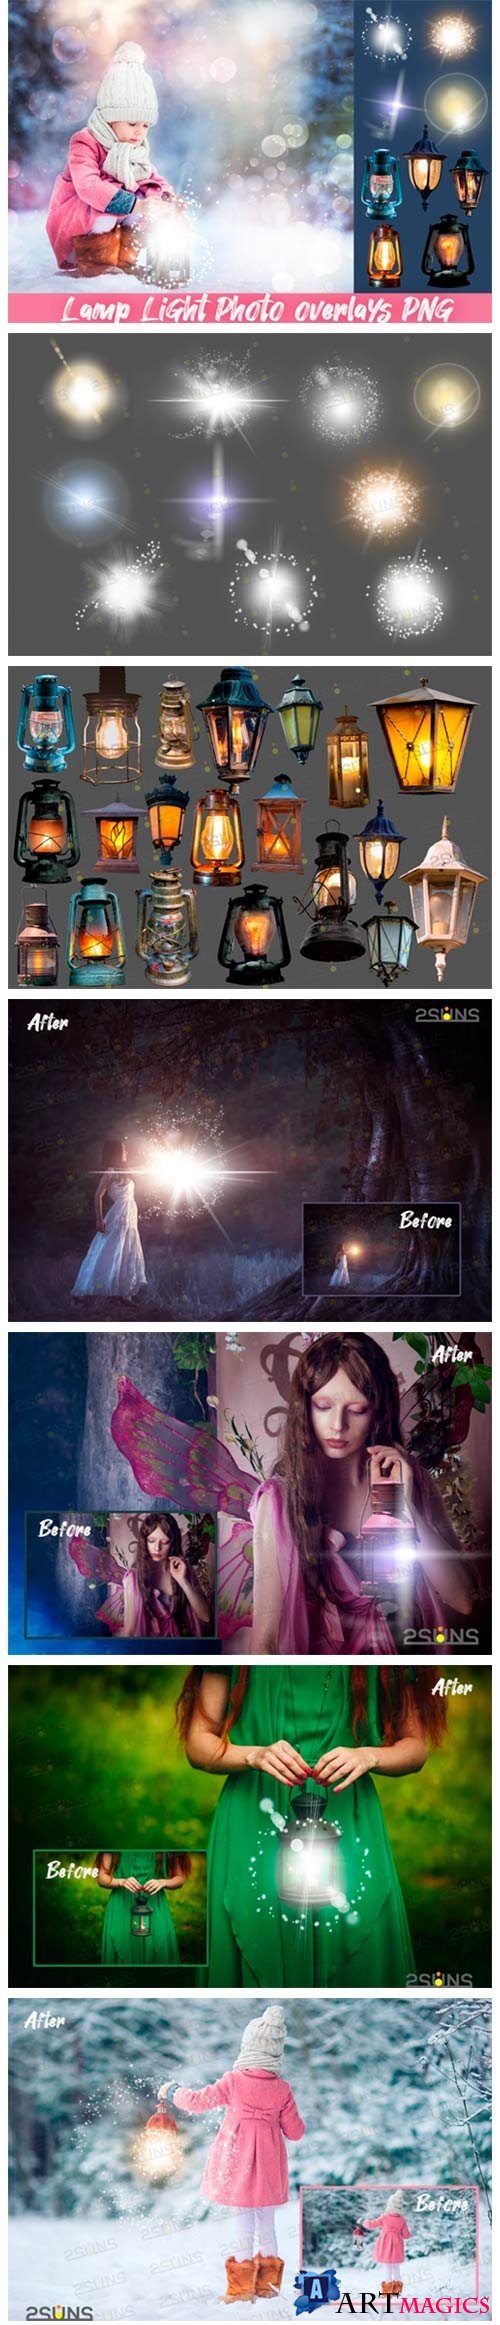 Photo overlays Photoshop lamp light clipart png lantern - 411105